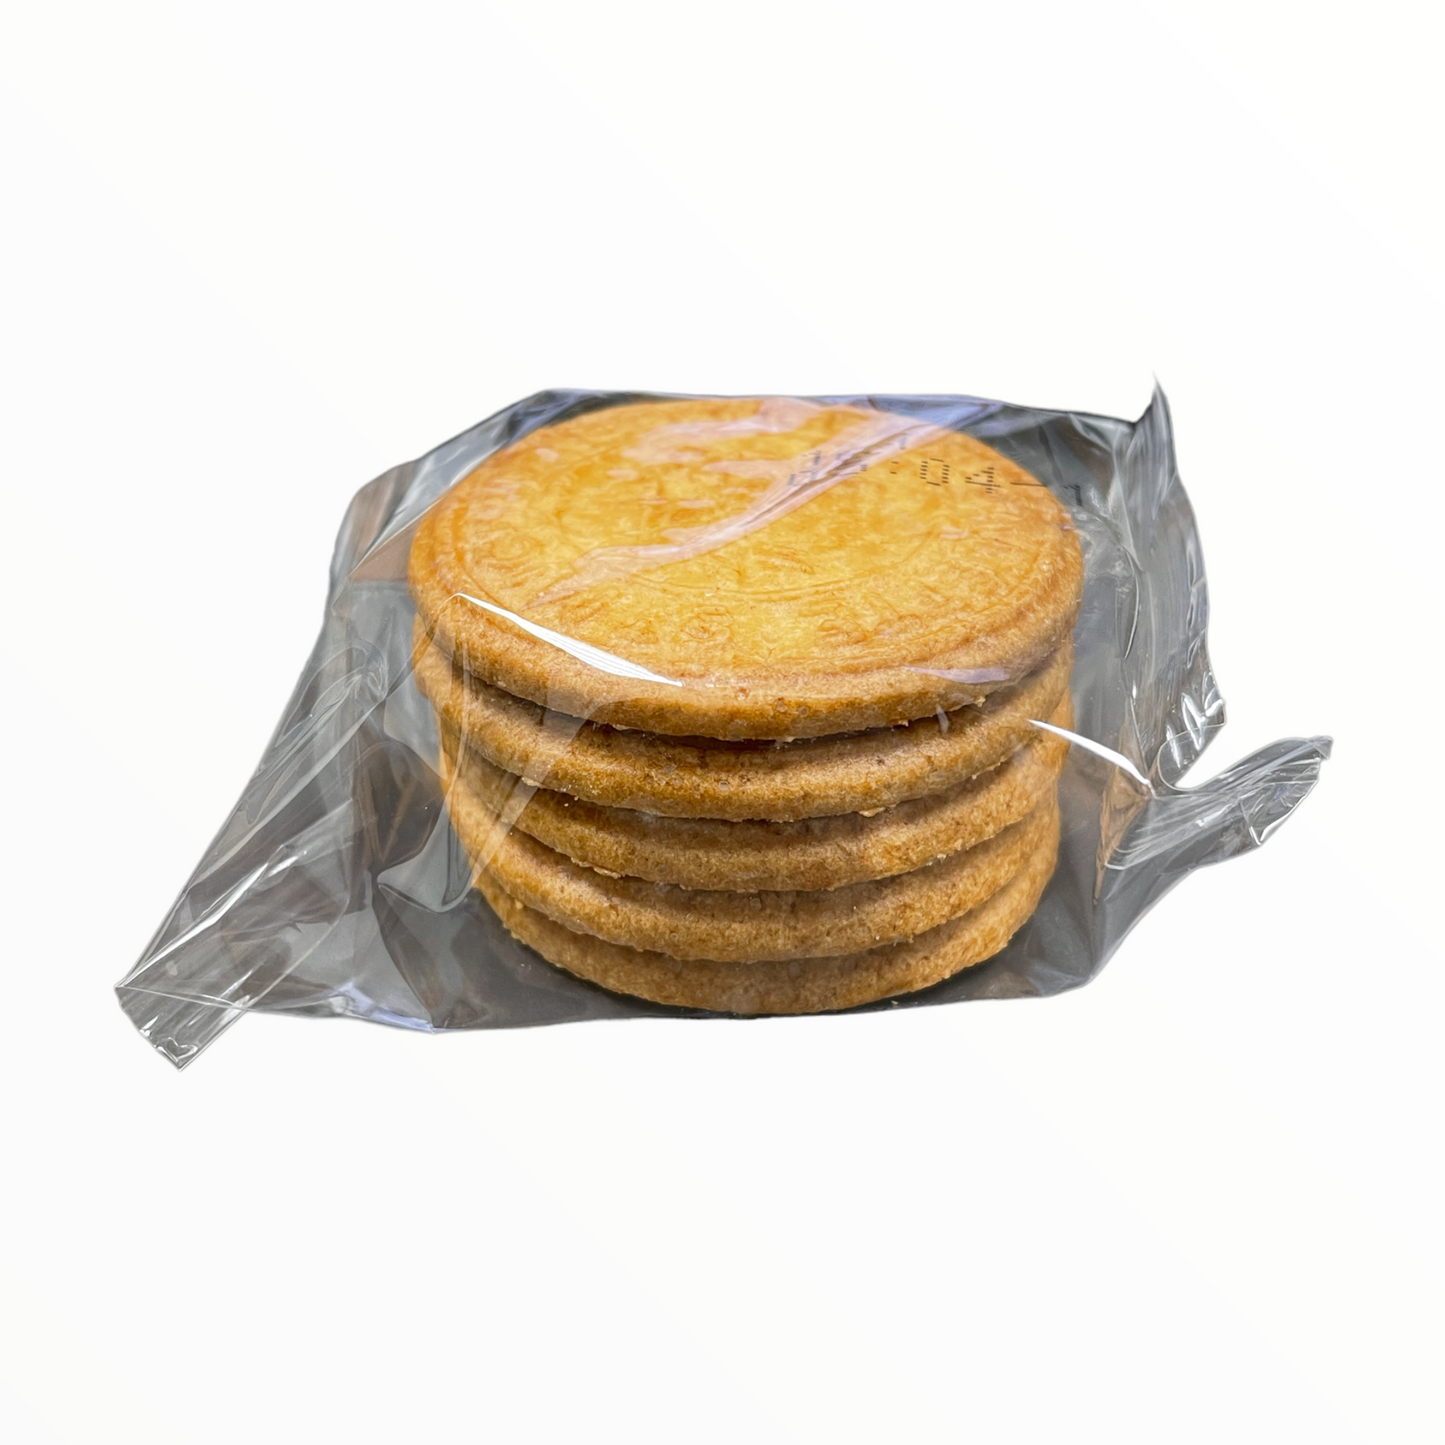 St Michel Galettes Cookies 4.6 oz.